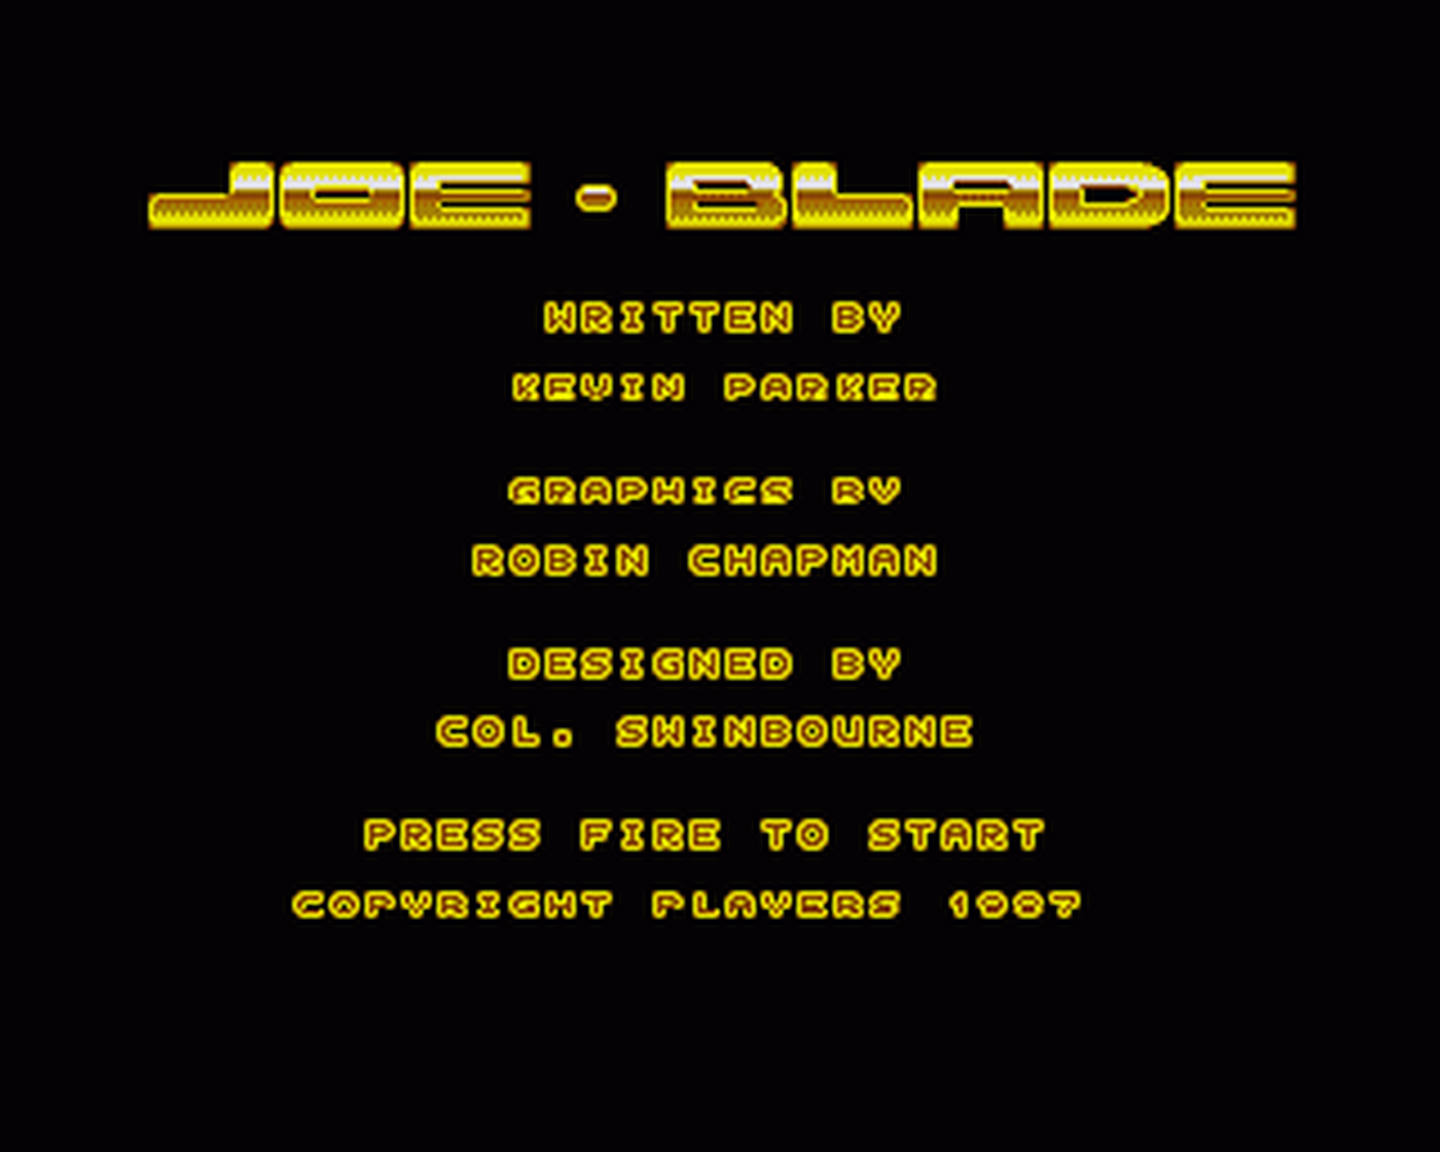 Amiga GameBase Joe_Blade Players 1988